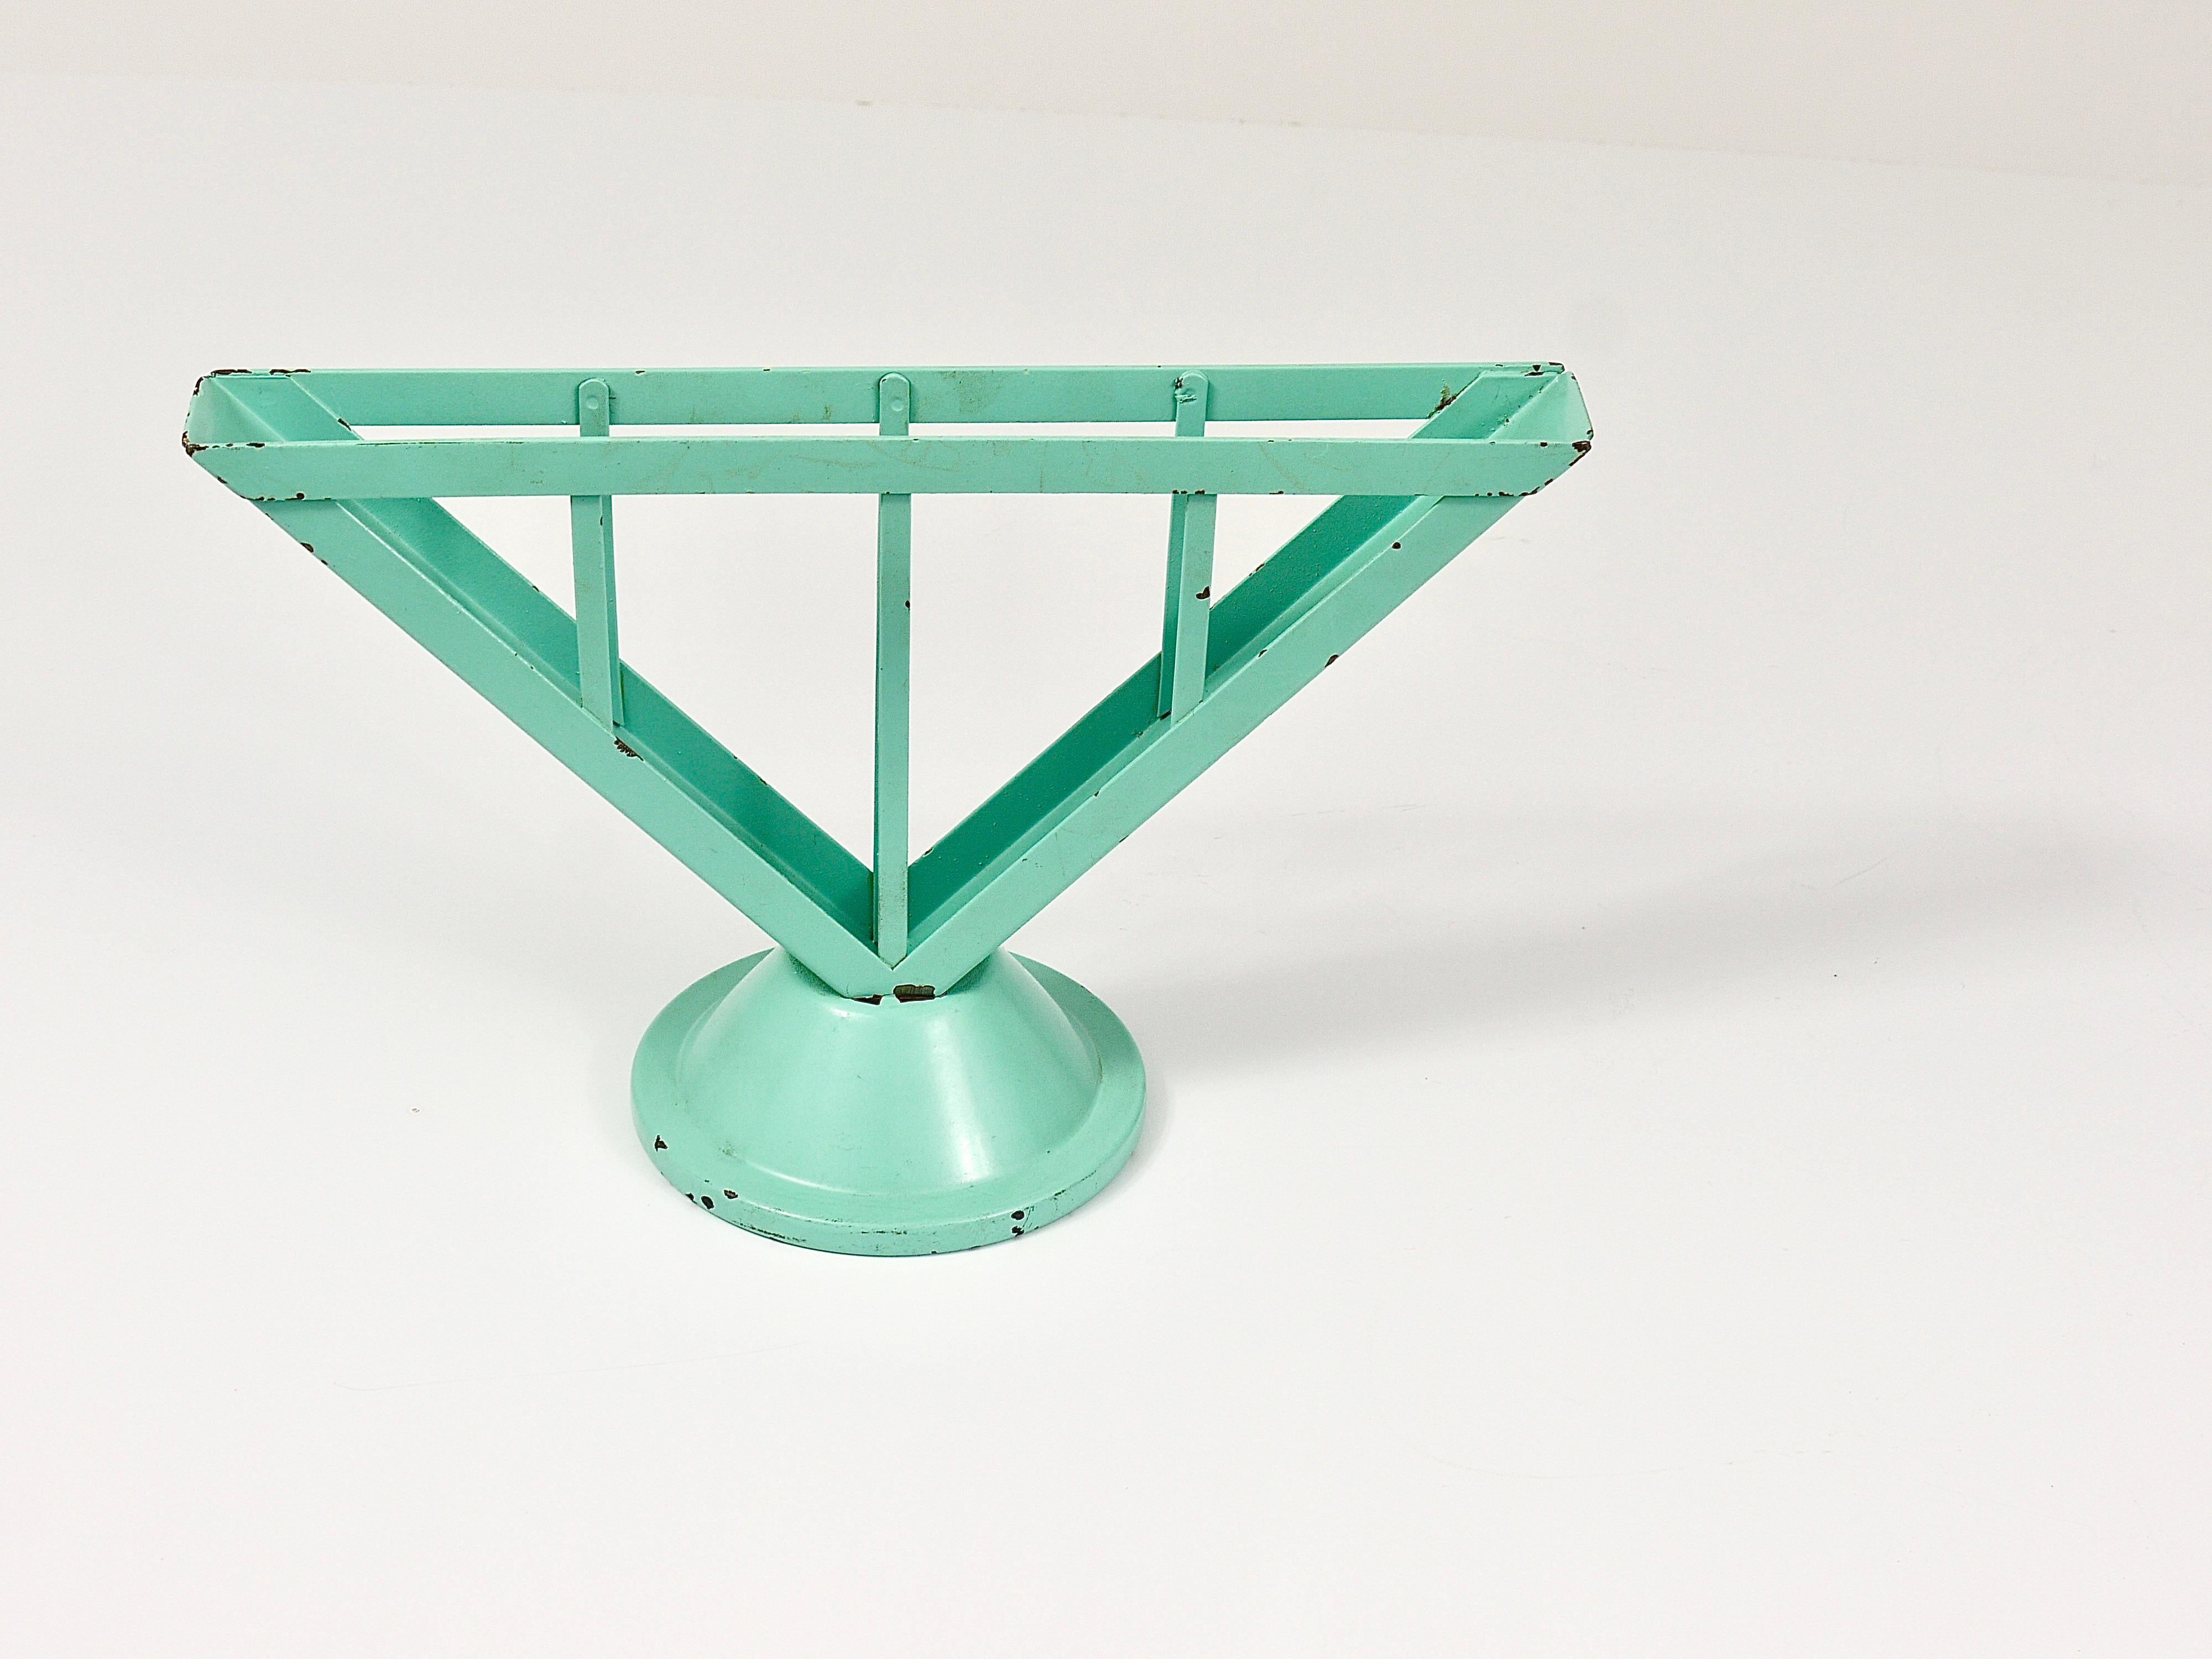 Decorative Green Marianne Brandt Avantgarde Bauhaus Napkin Holder, Ruppel, 1930s For Sale 9